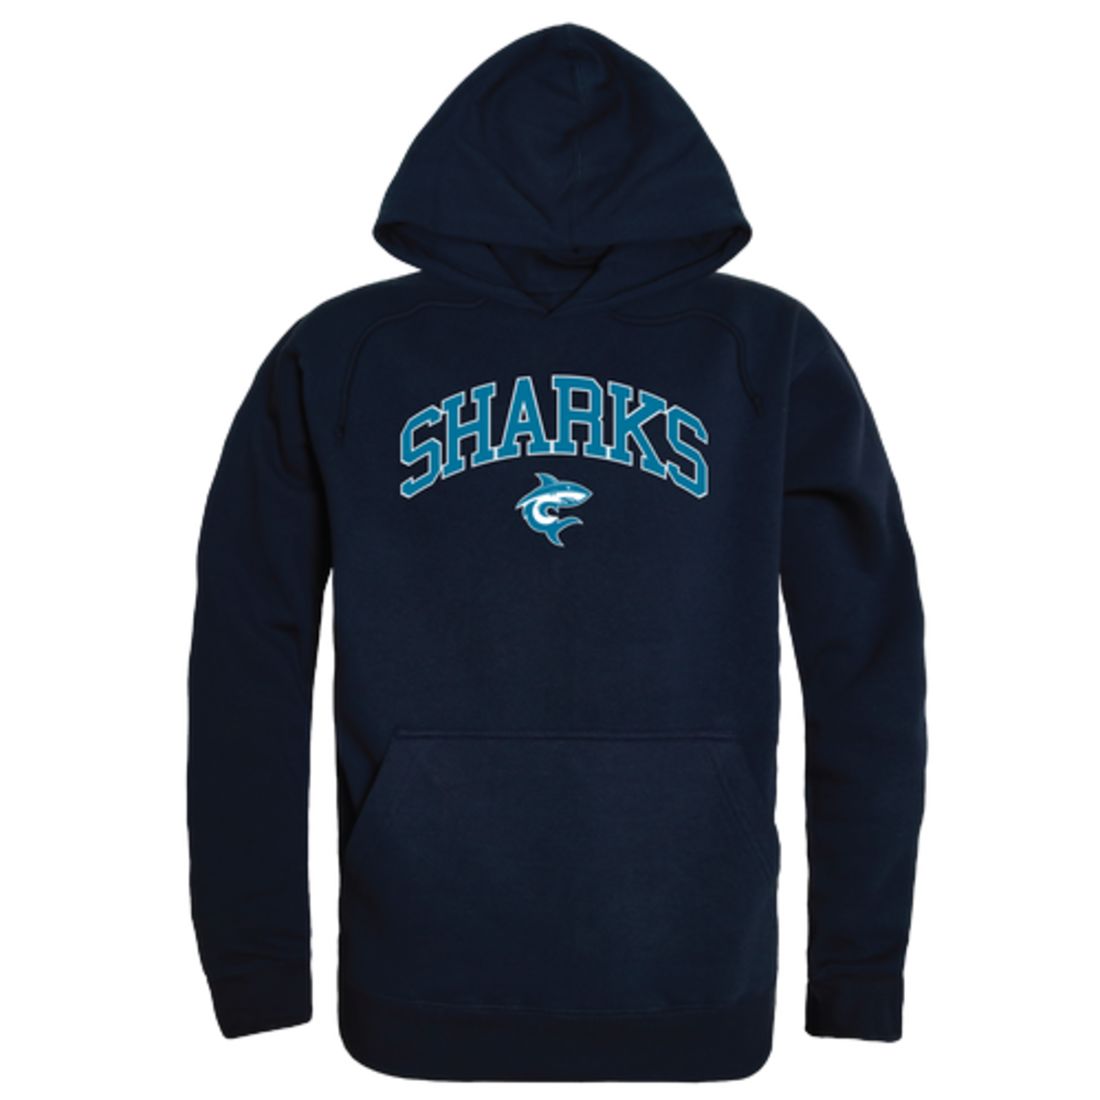 San Jose Sharks Hoodie, Sharks Sweatshirts, Sharks Fleece